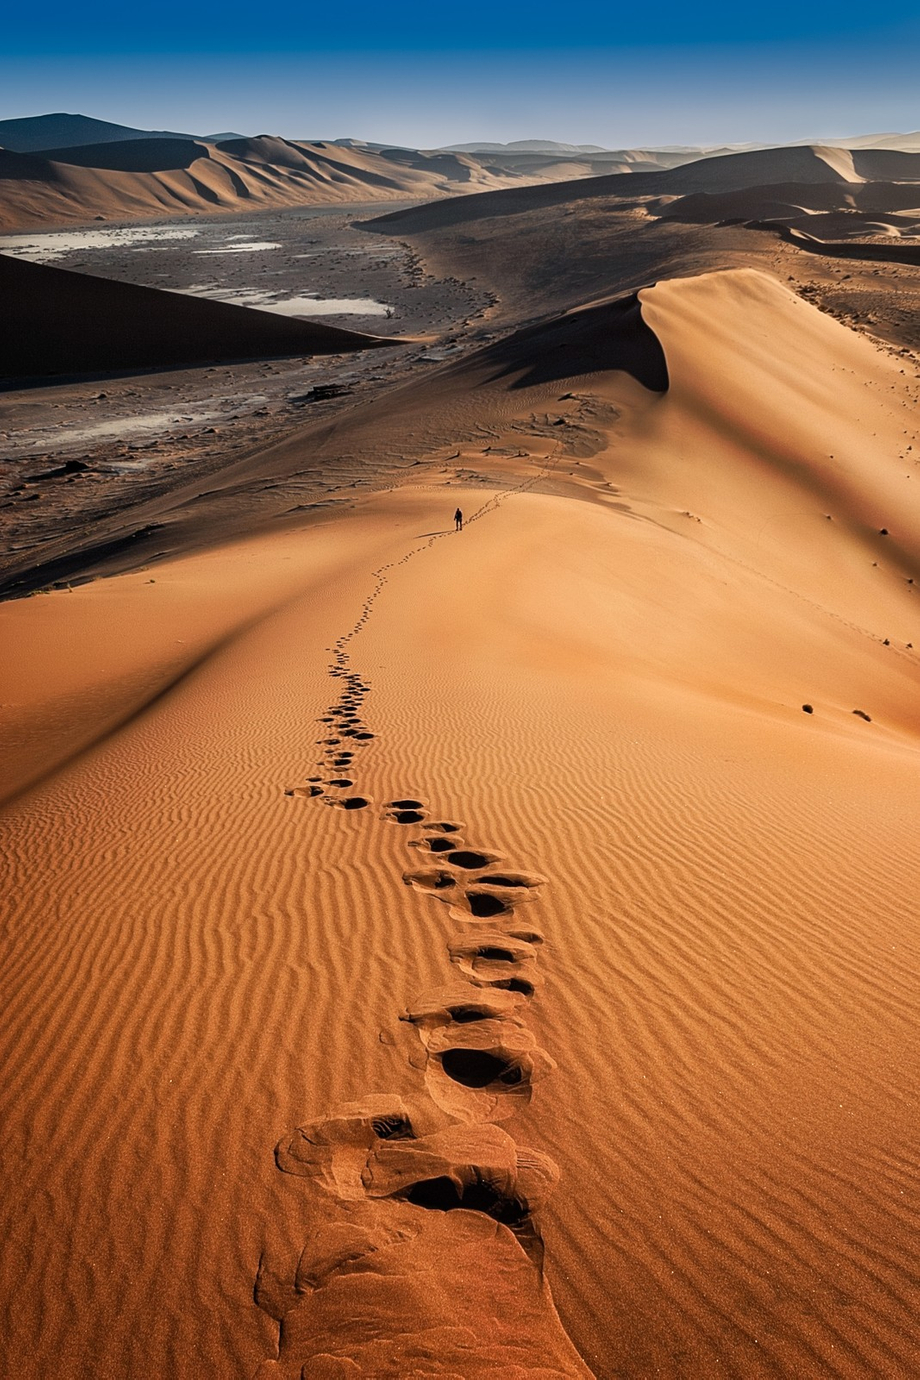 Too far away by Darrenp - Desert Explorer Photo Contest